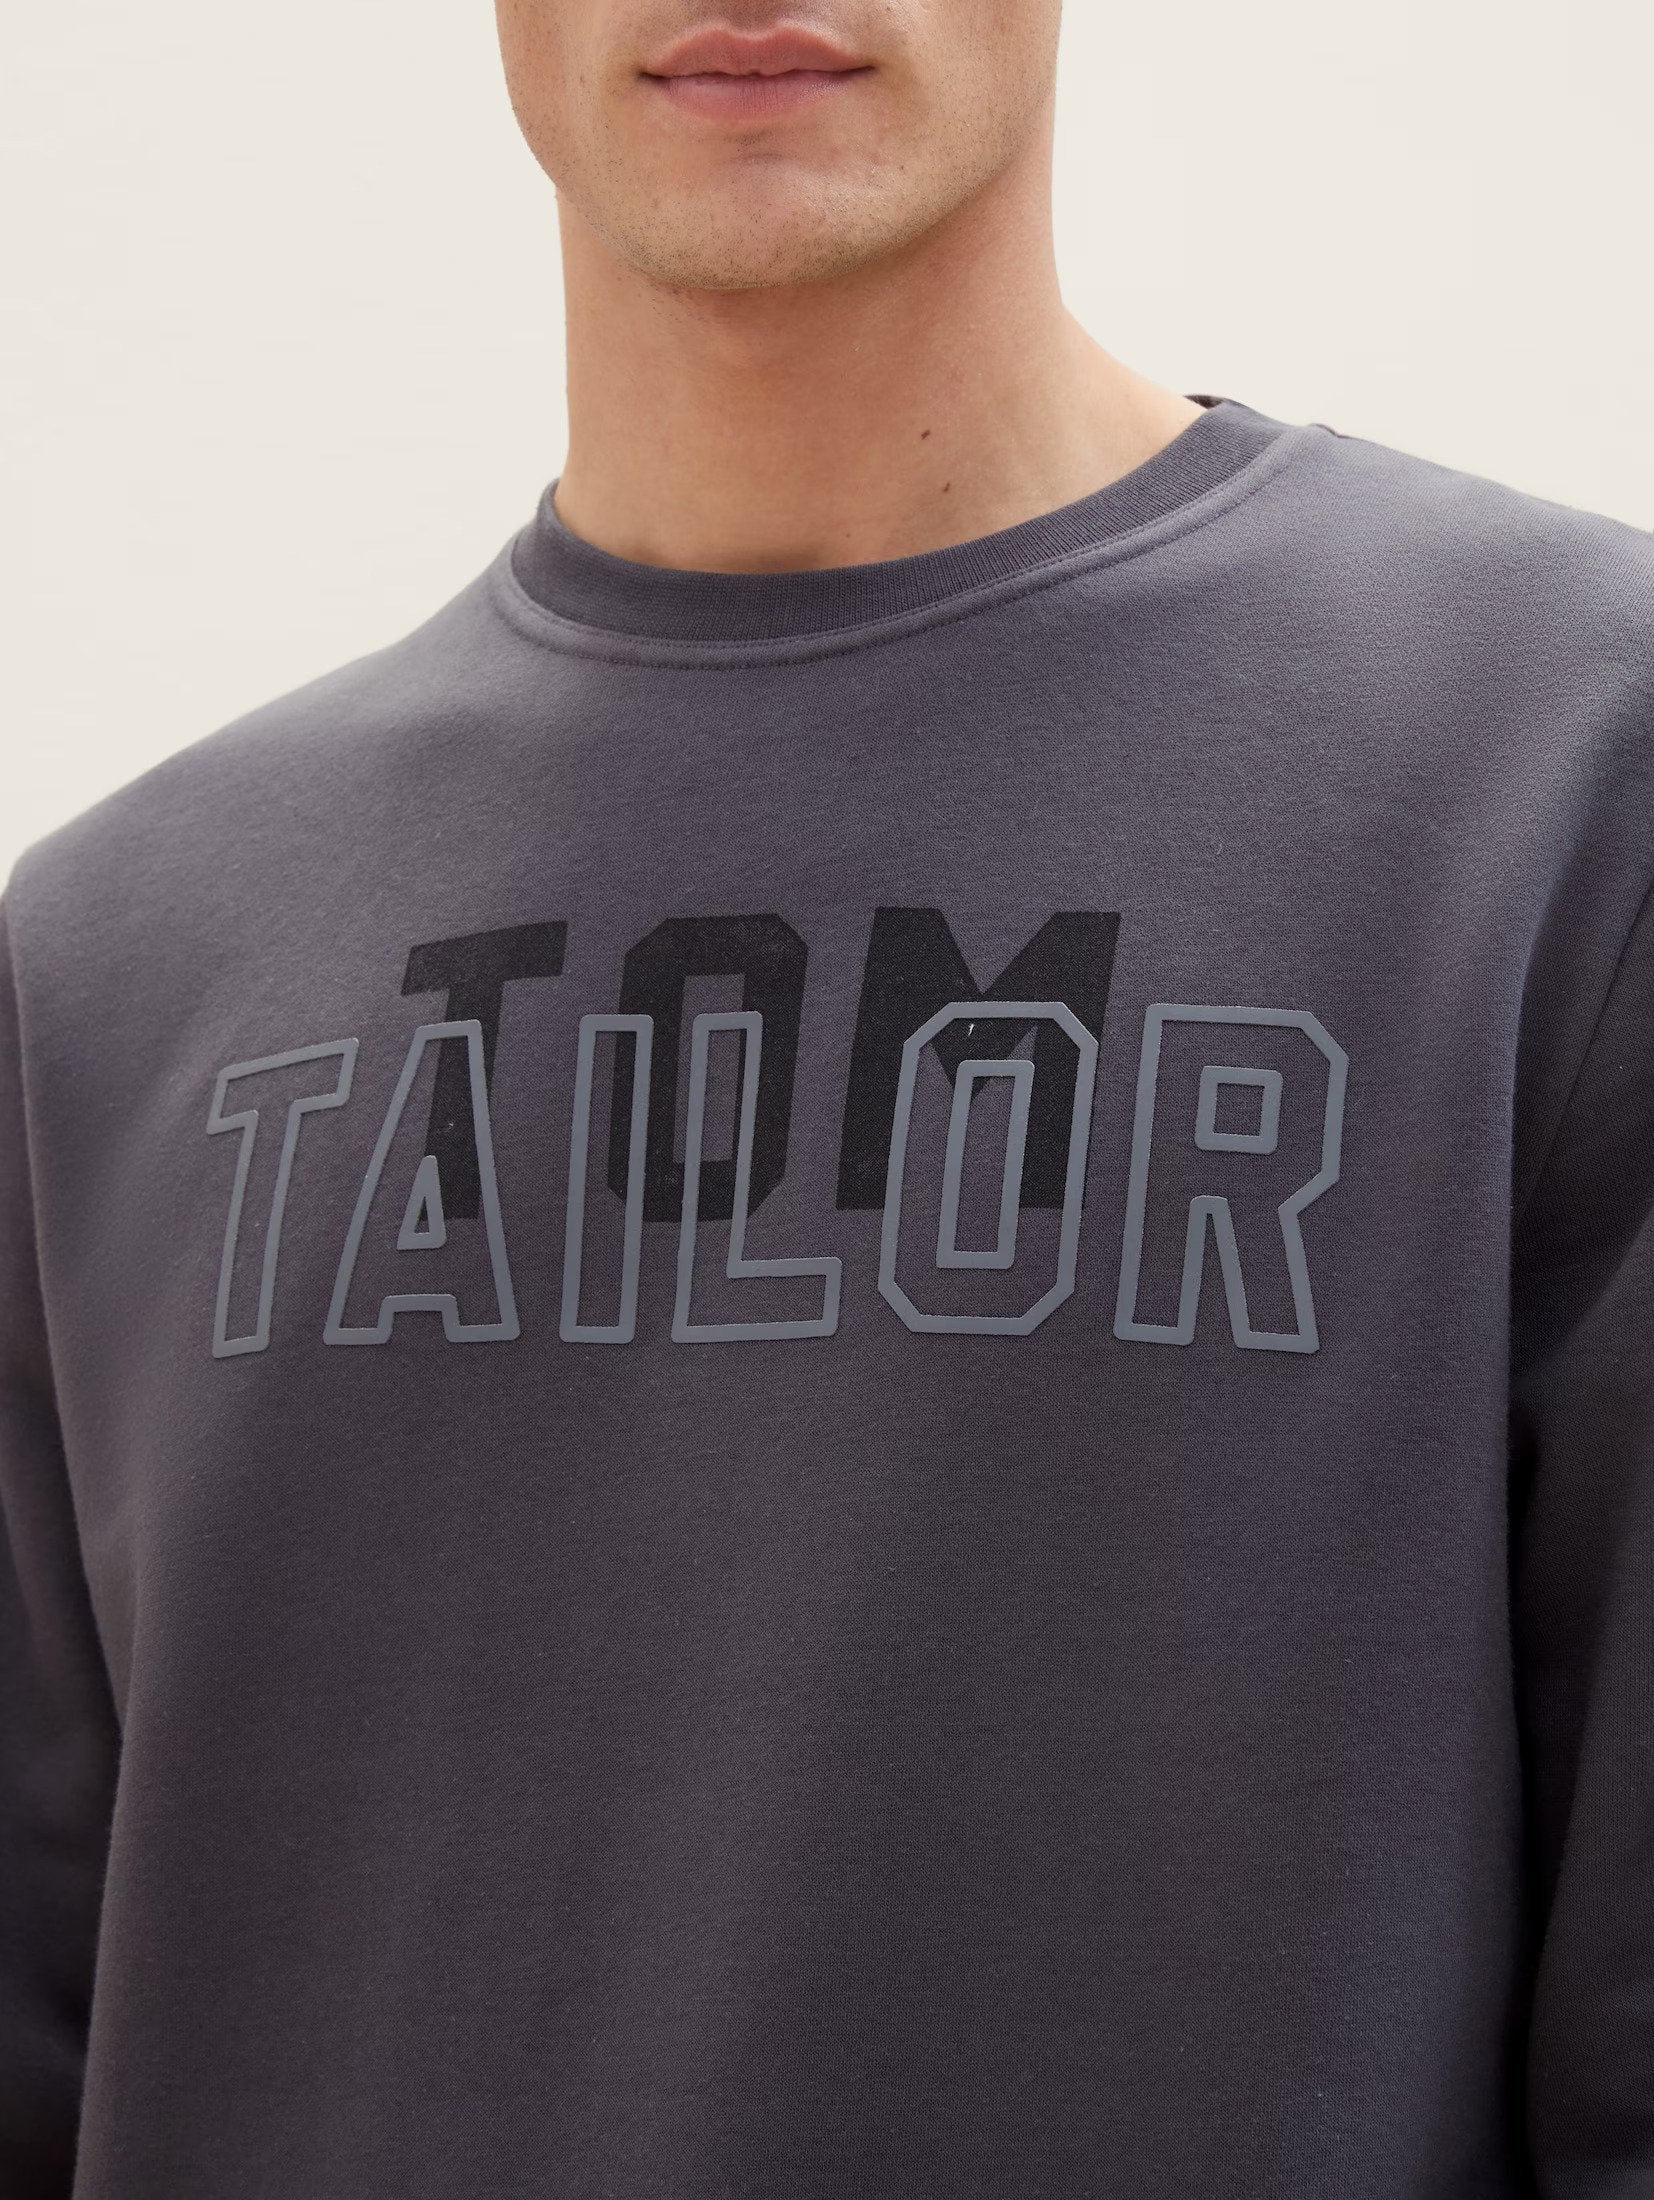 Tom Tailor Printed Tarmac Grey Sweater